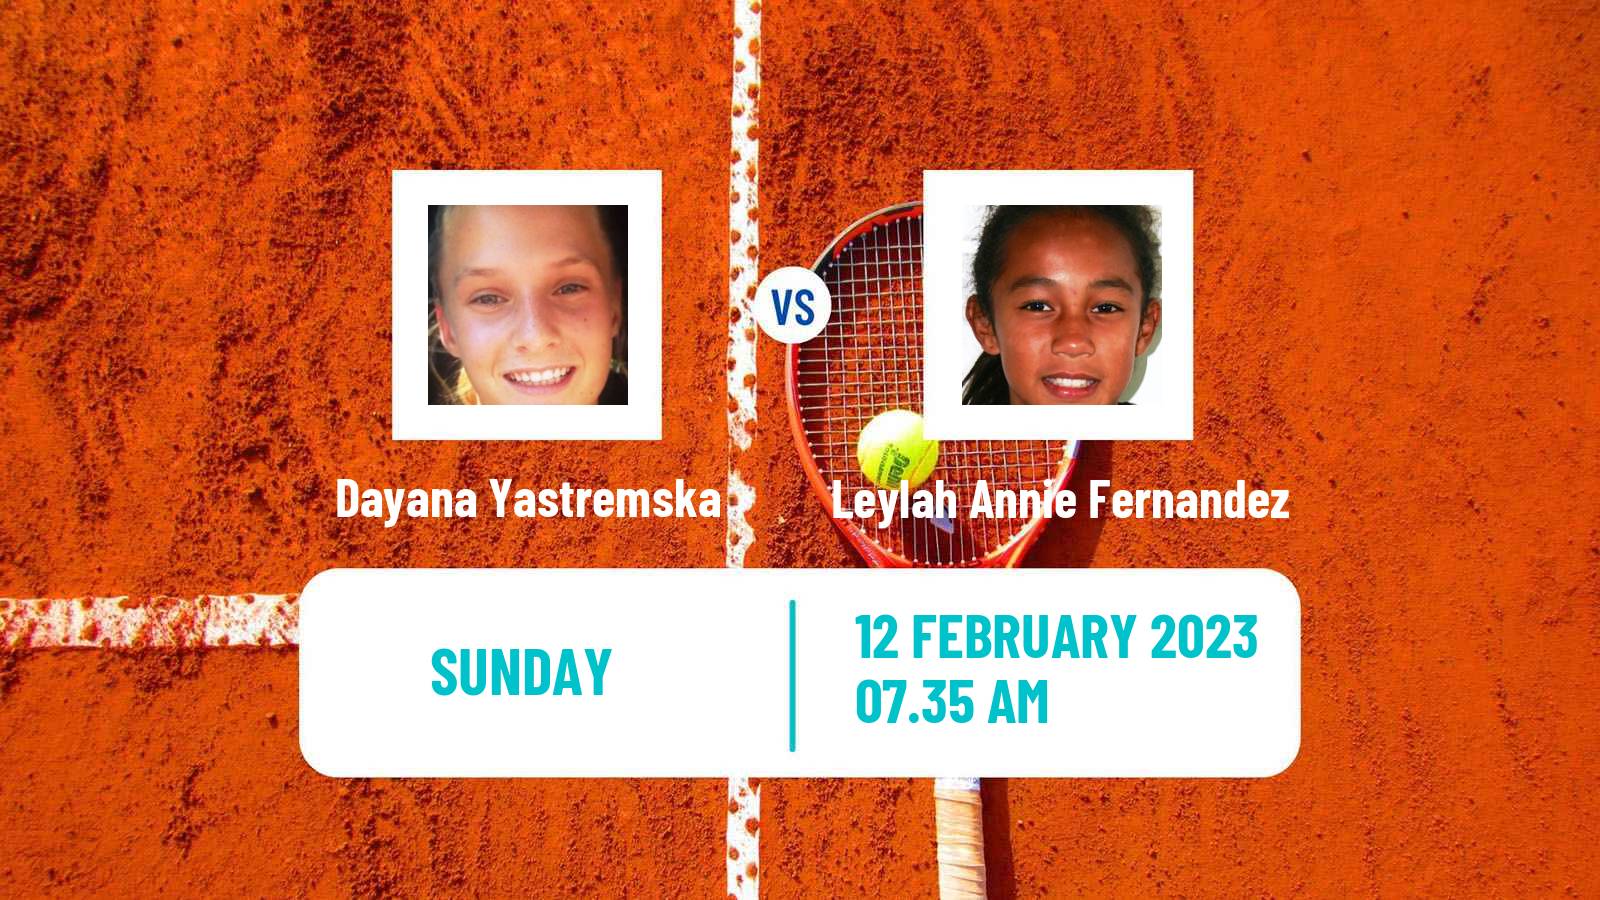 Tennis WTA Doha Dayana Yastremska - Leylah Annie Fernandez